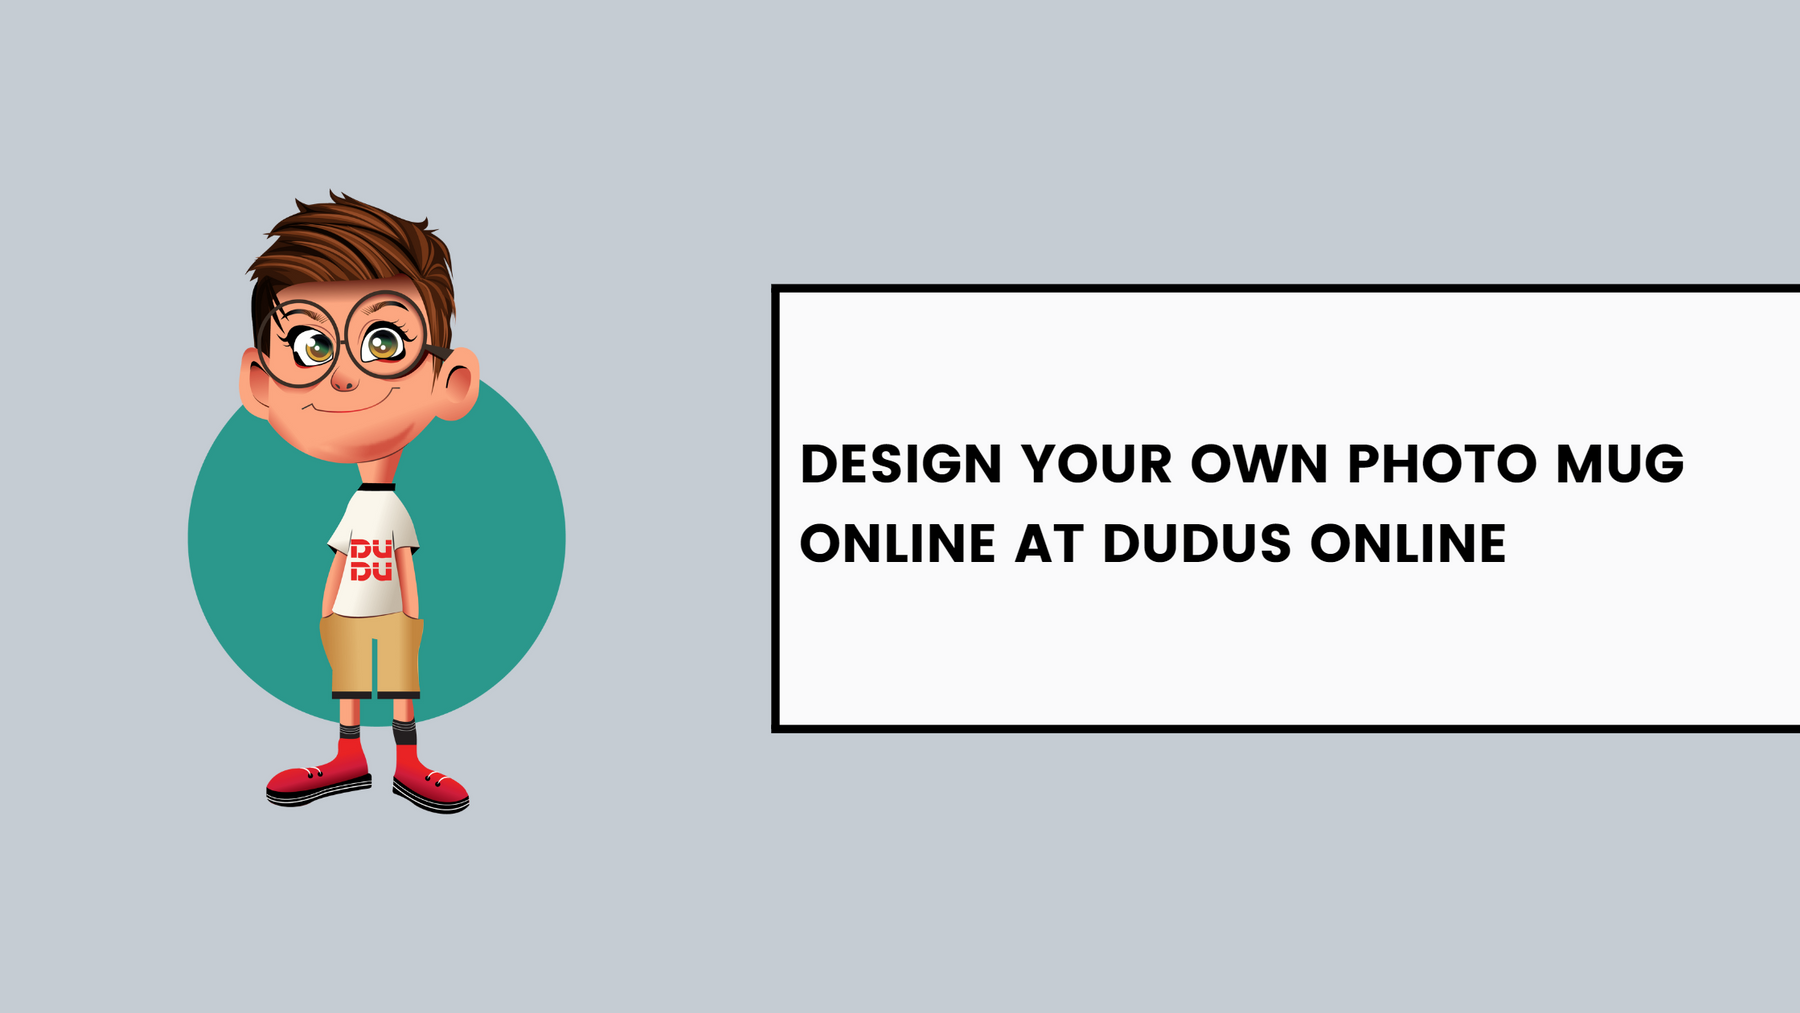 Design Your Own Photo Mug Online at Dudus Online